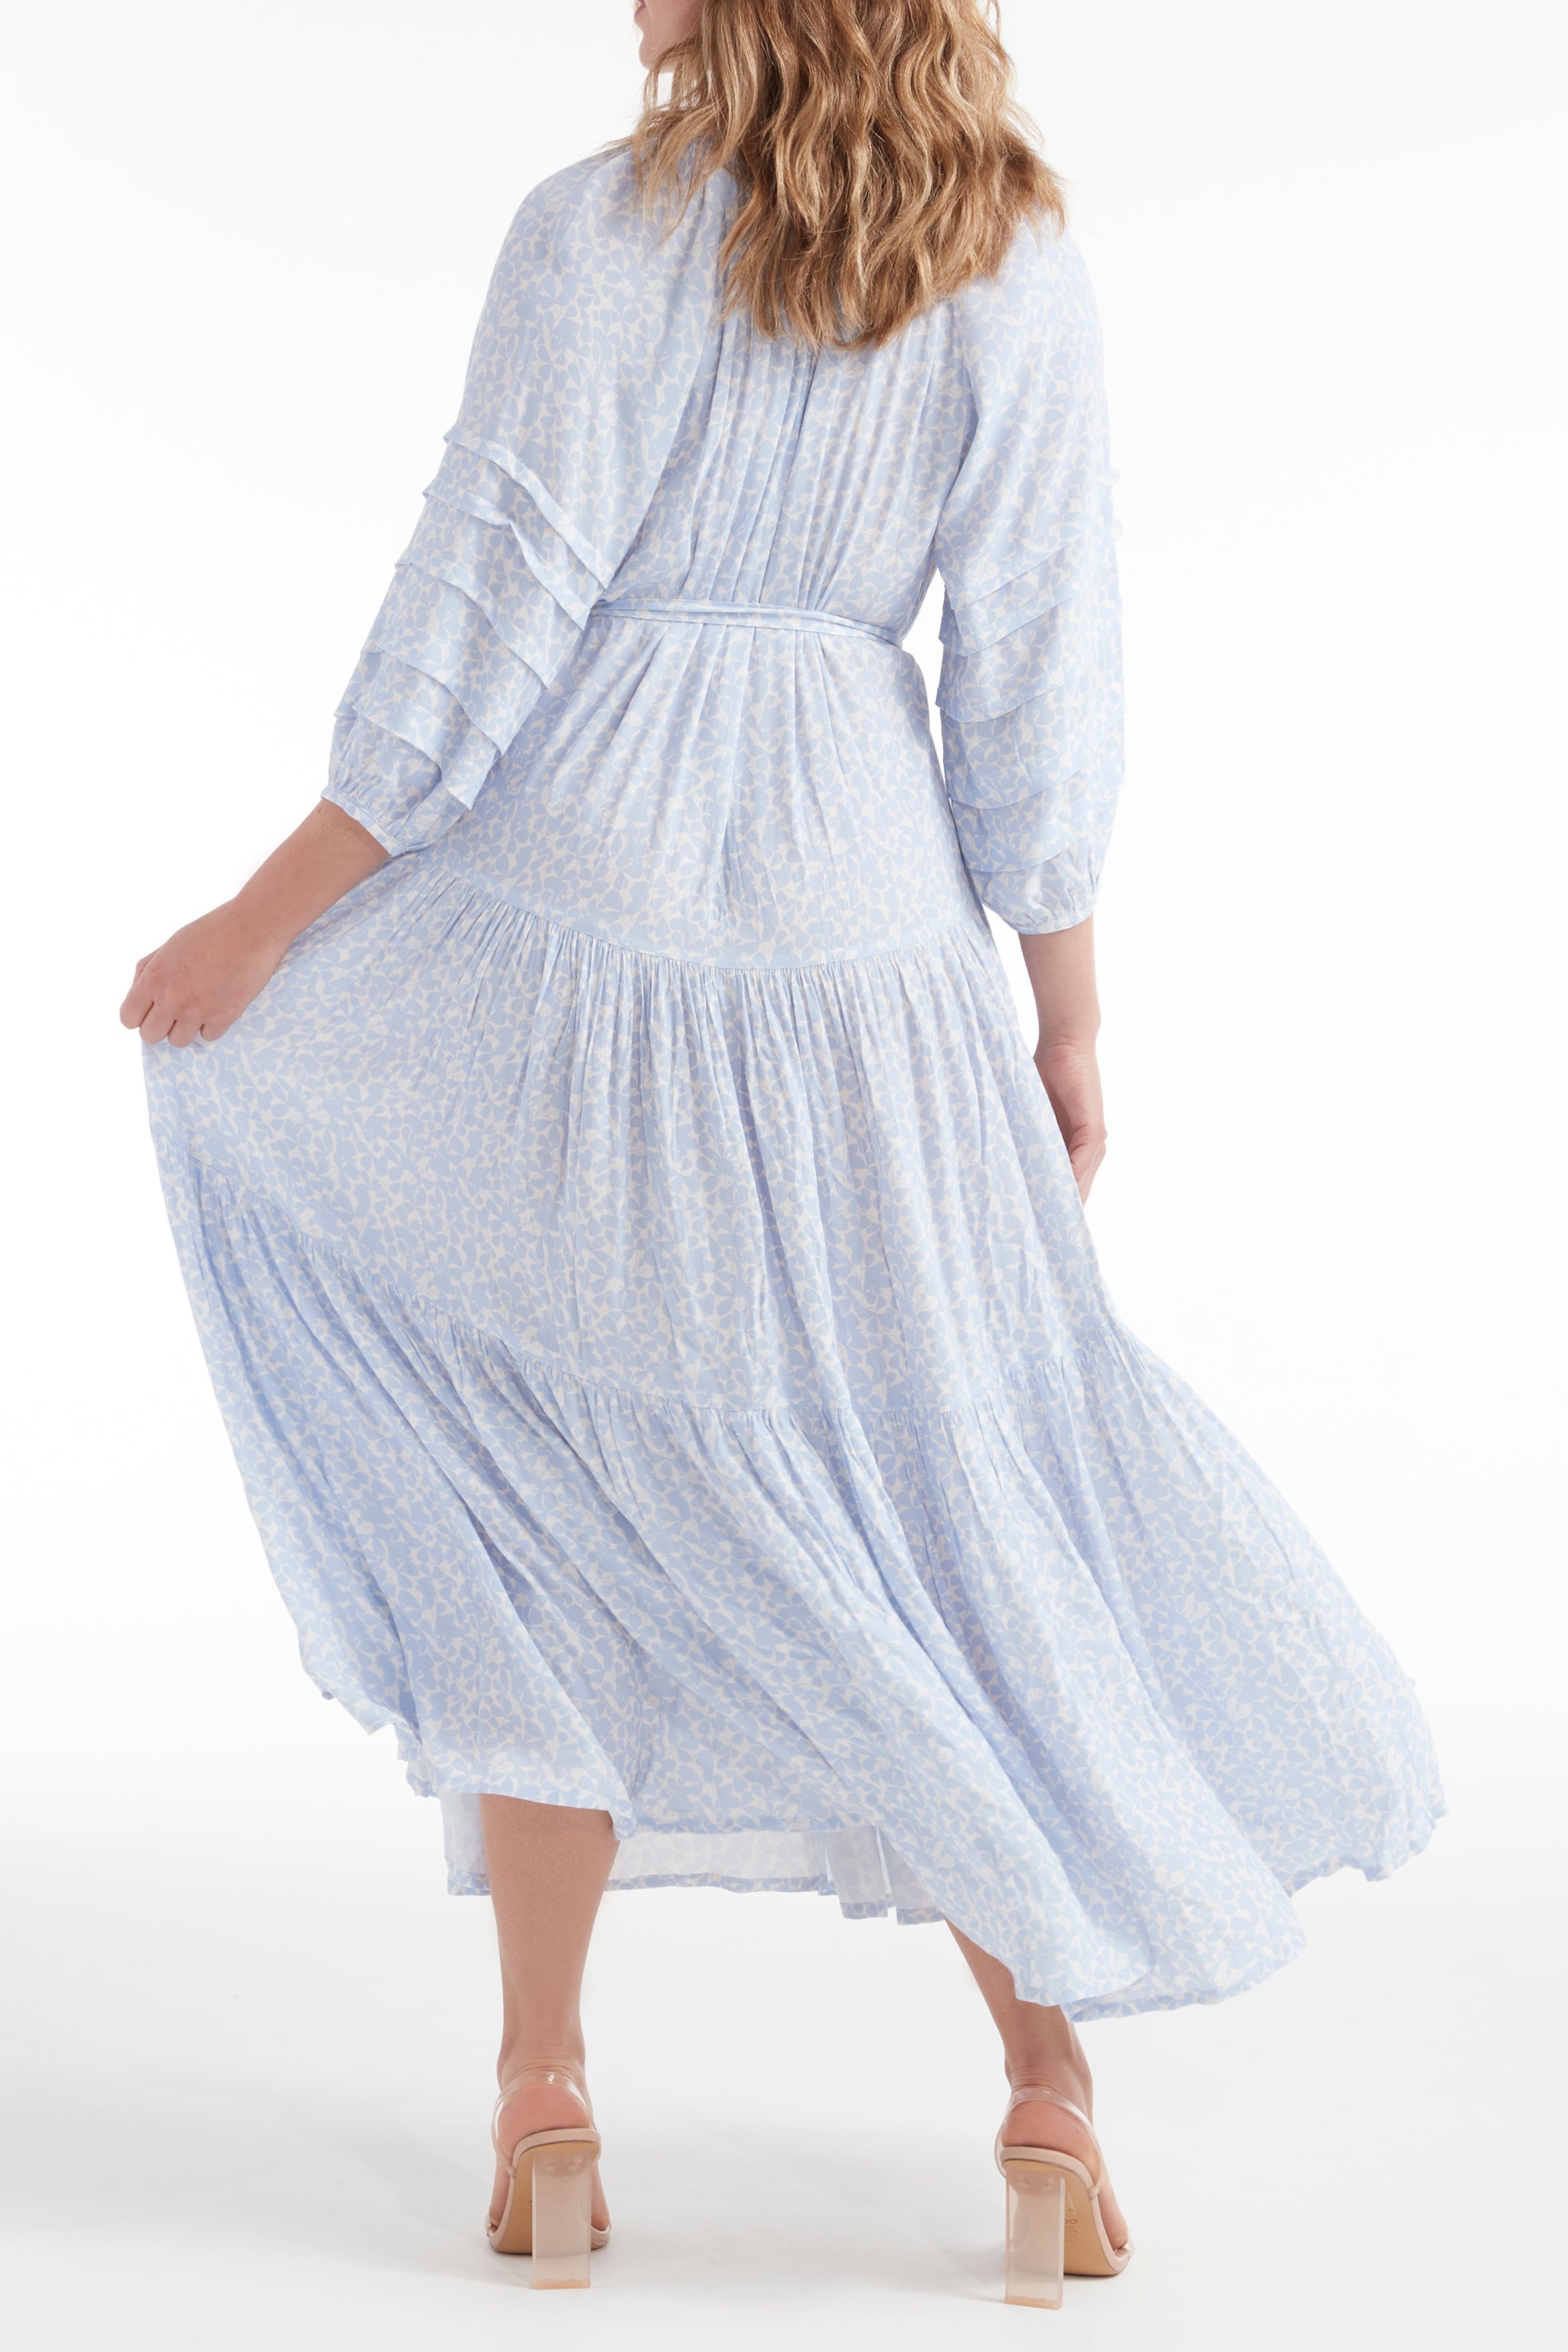 Zoey Jo Tiered Maxi Dress by Hermoza